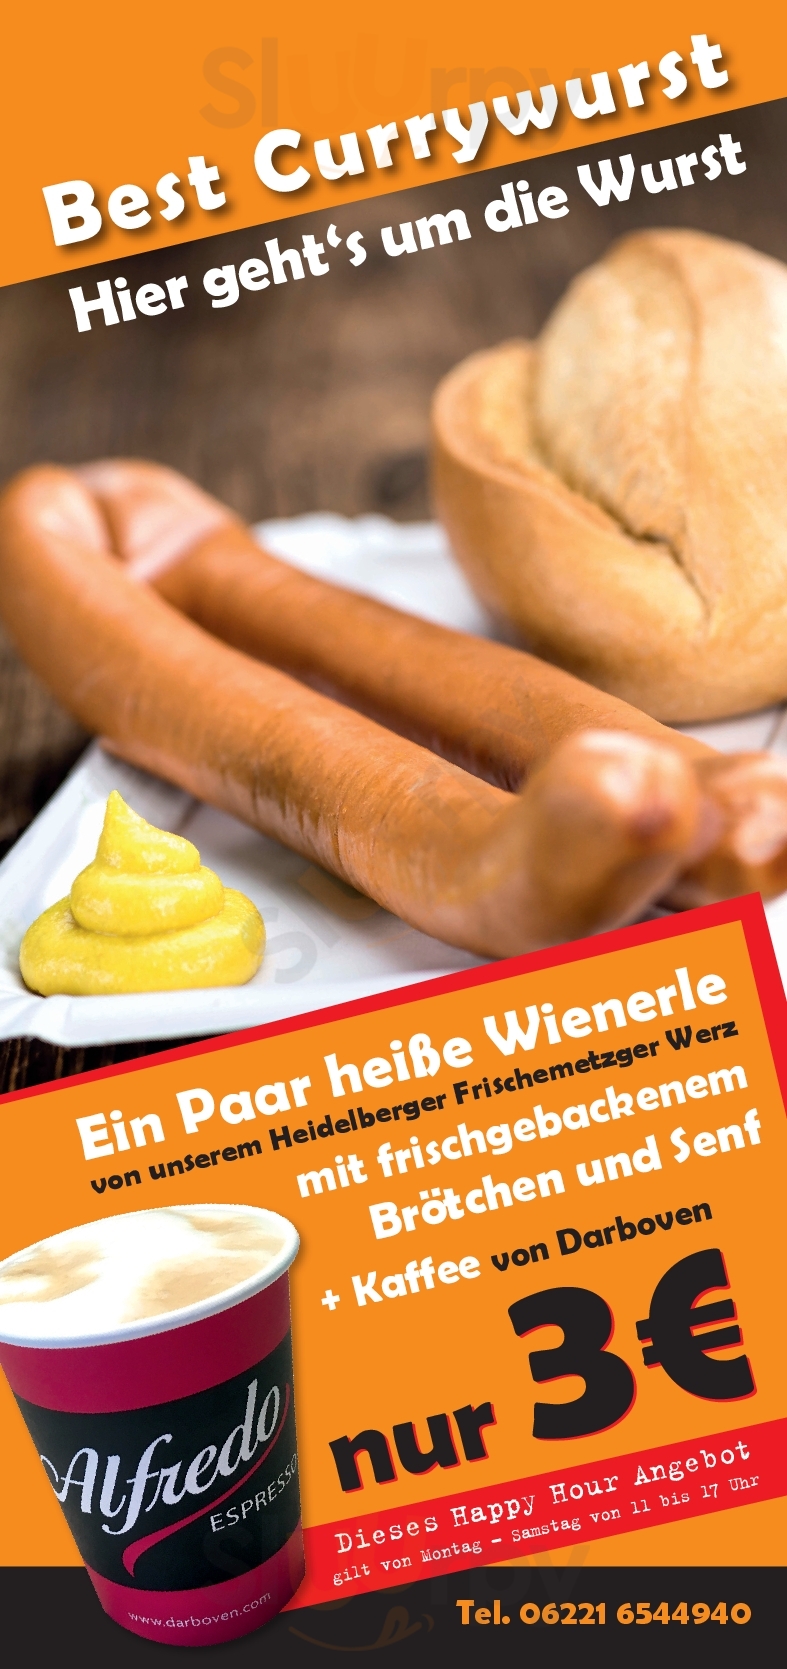 Best Currywurst Heidelberg Menu - 1